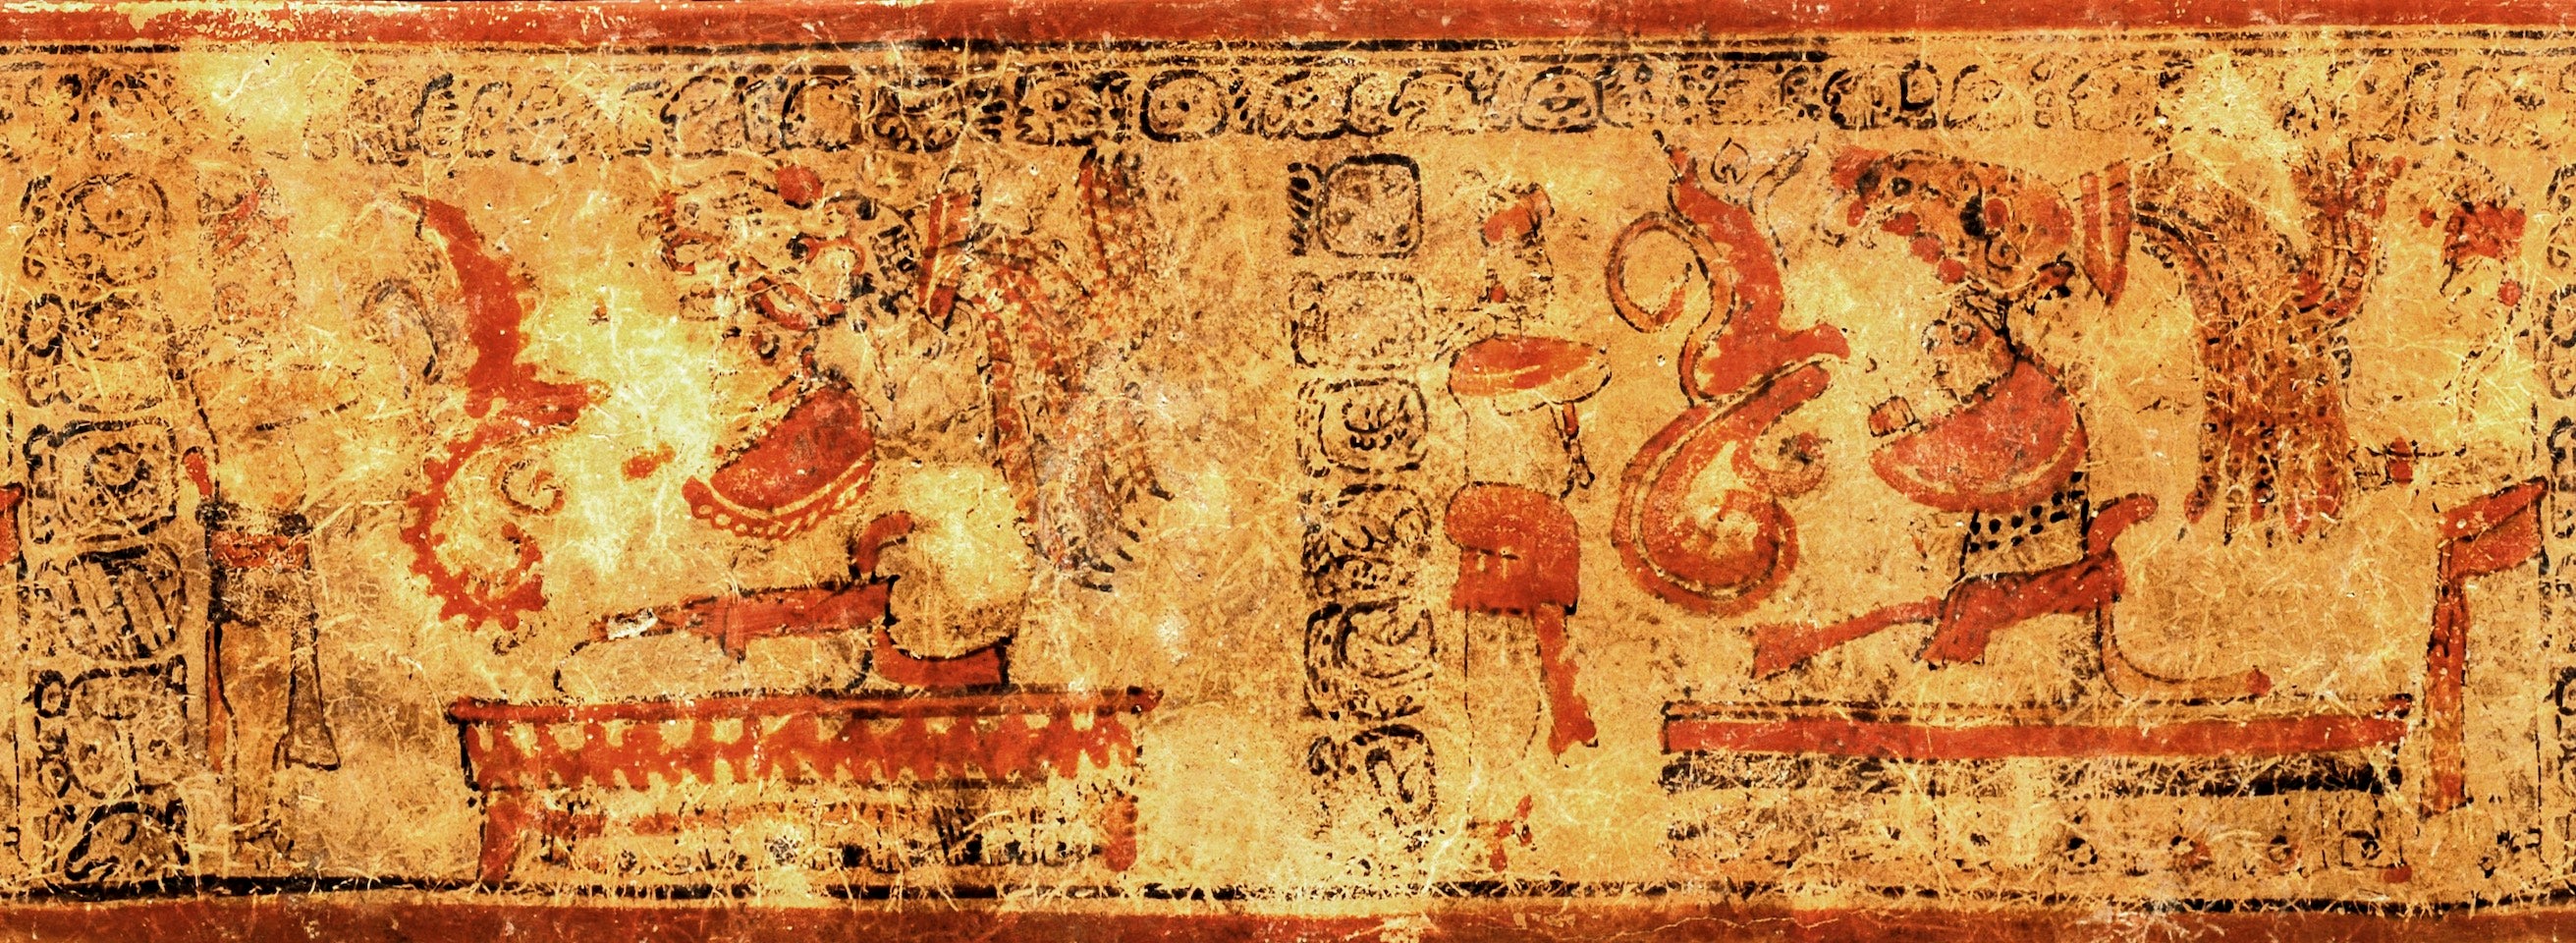 An Ancient Maya Ambassador S Bones Show A Life Of Privilege And Hardship News